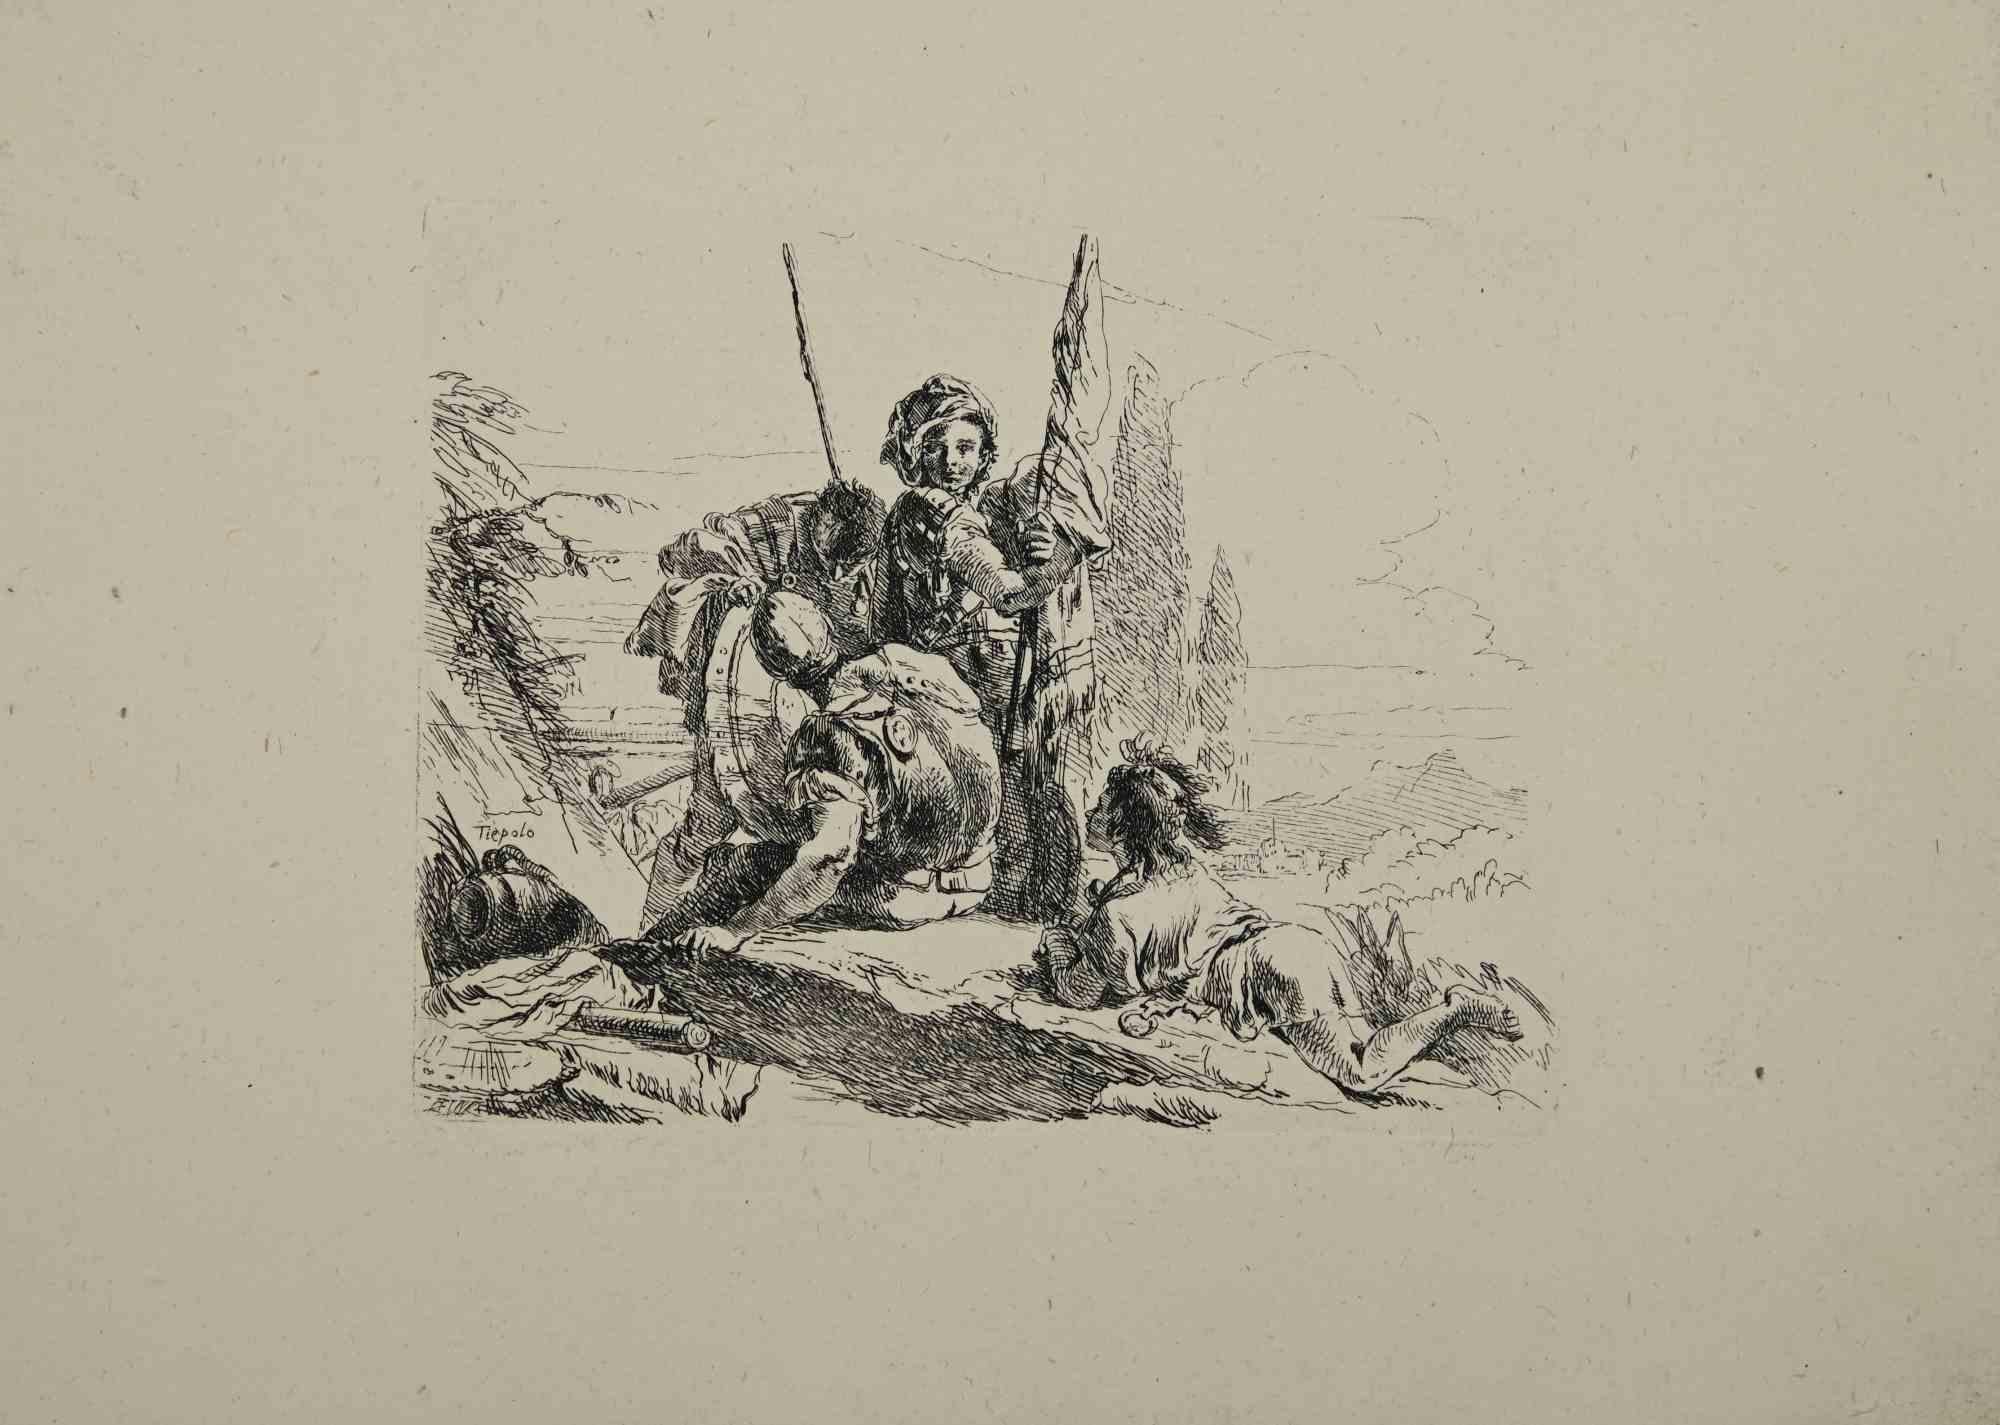 Figurative Print Giovanni Battista Tiepolo - Deux soldats - eau-forte de G.B. Tiepolo - 1785